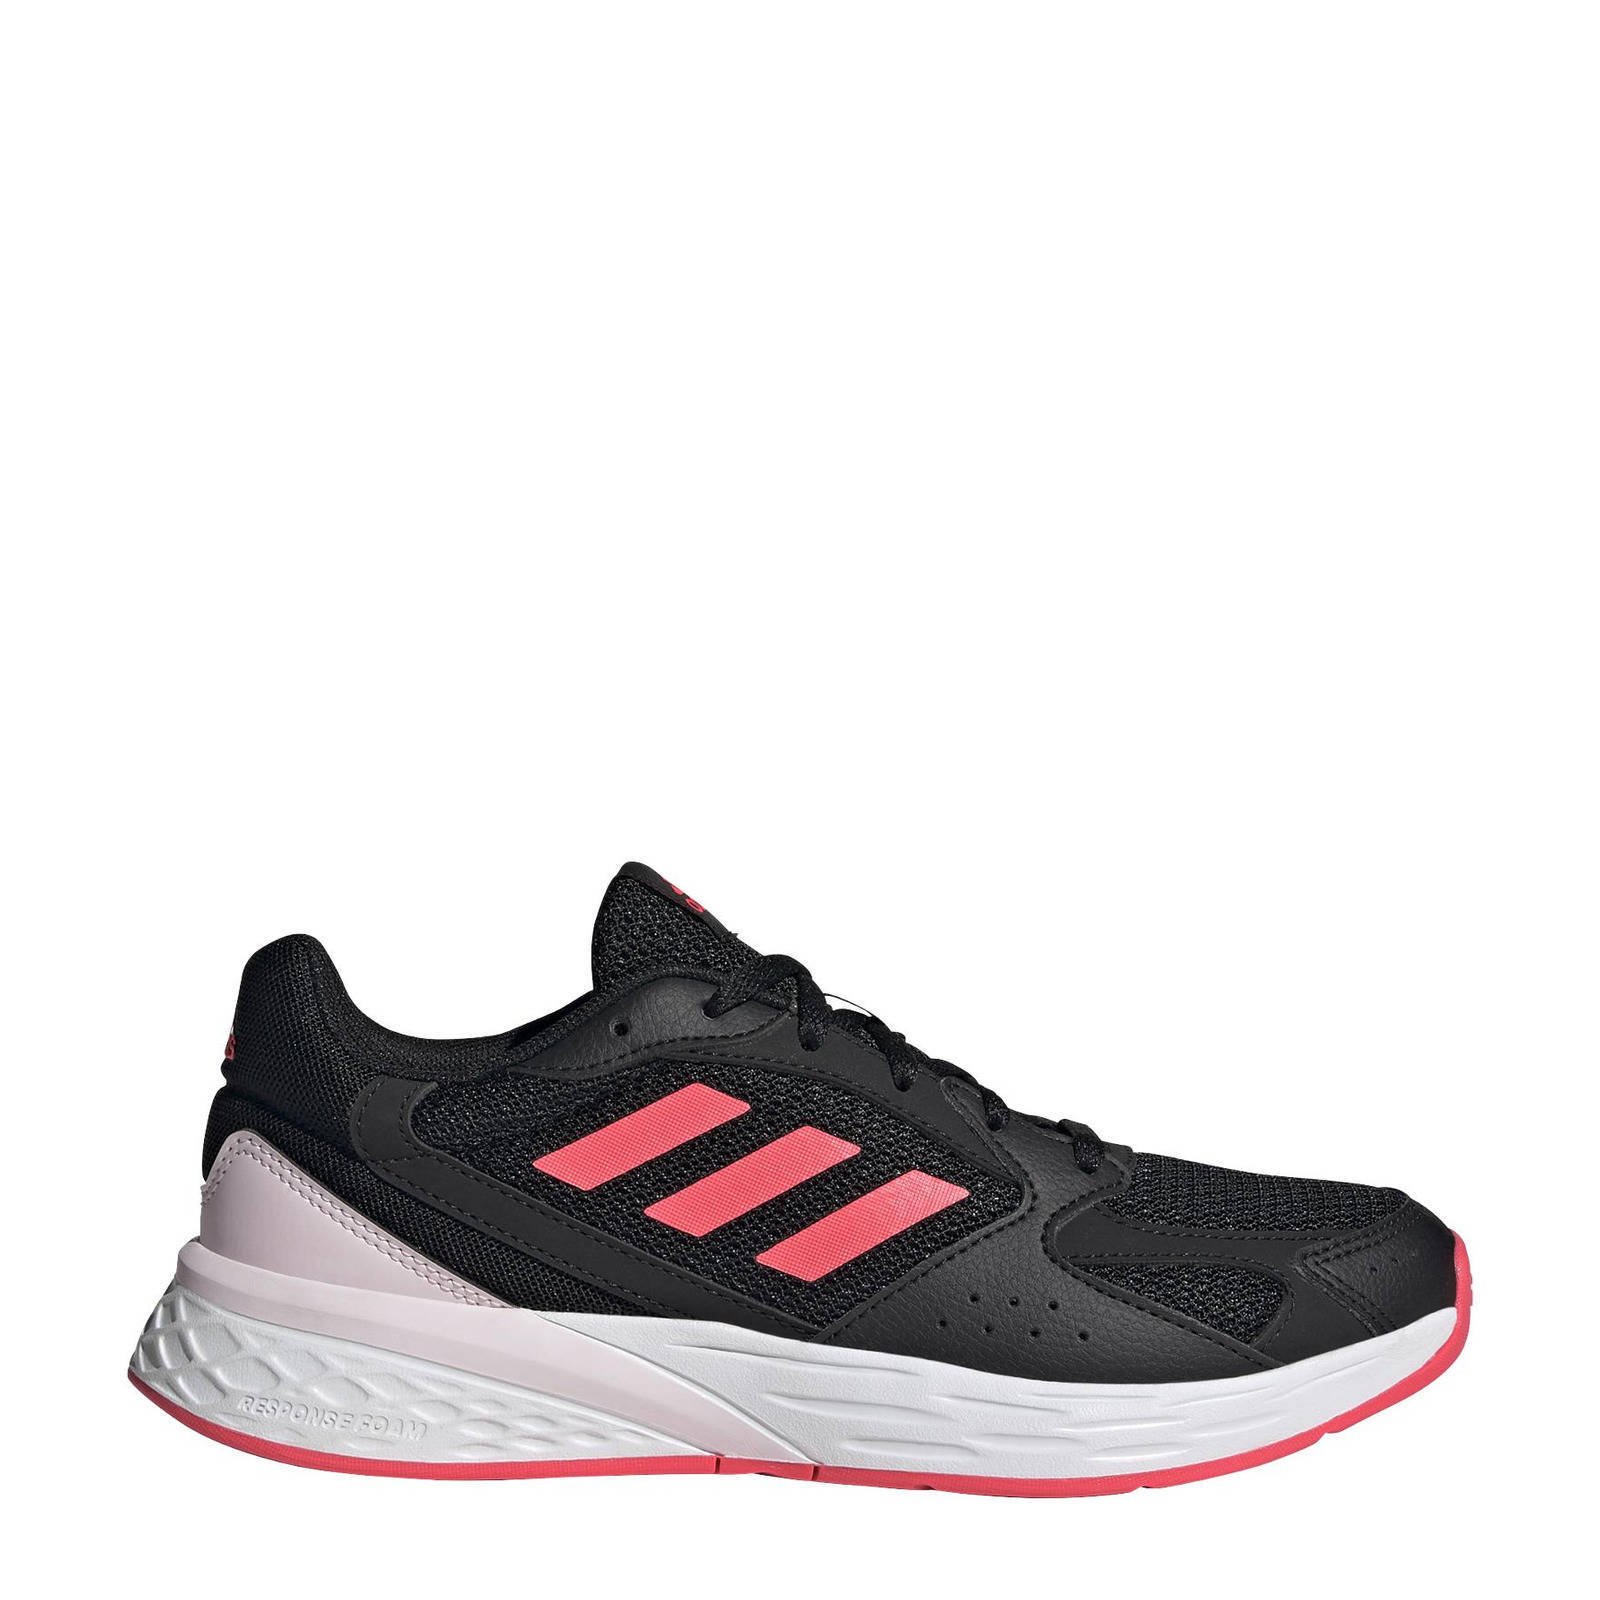 Adidas Performance Response Run hardloopschoenen Response Run zwart/rood online kopen